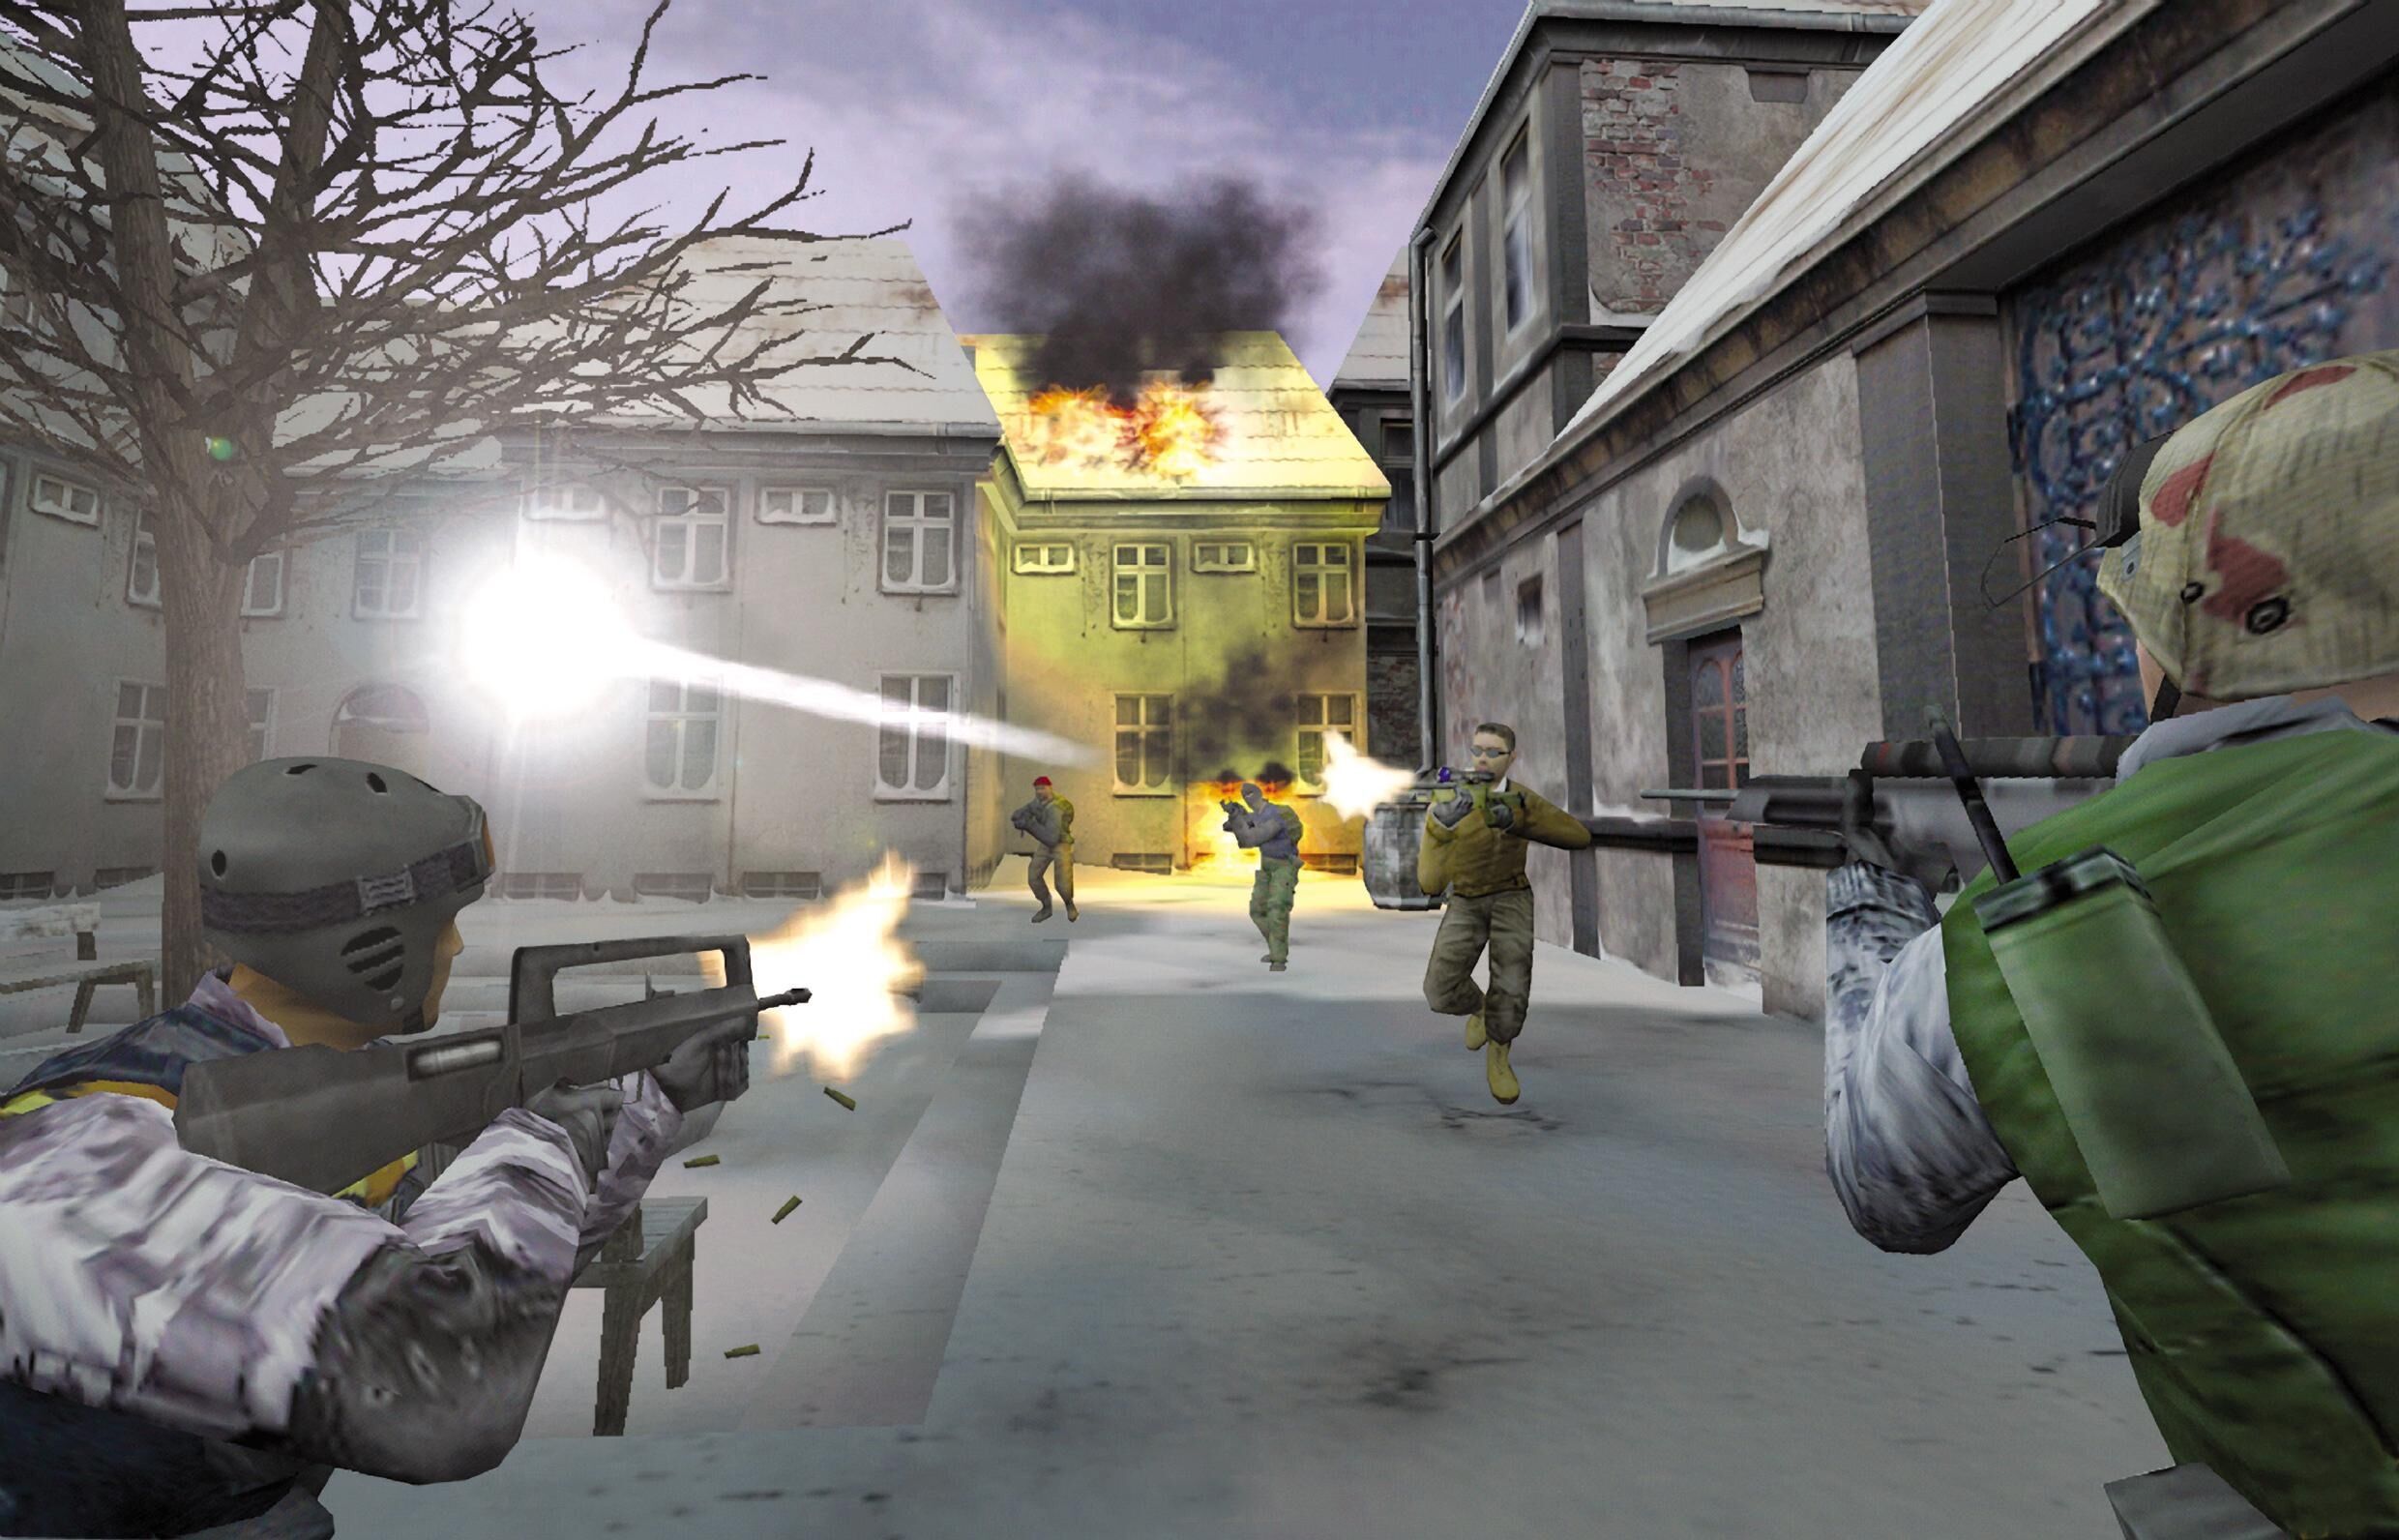 Counter-Strike: Condition Zero (Ritual Entertainment design), Counter-Strike Wiki